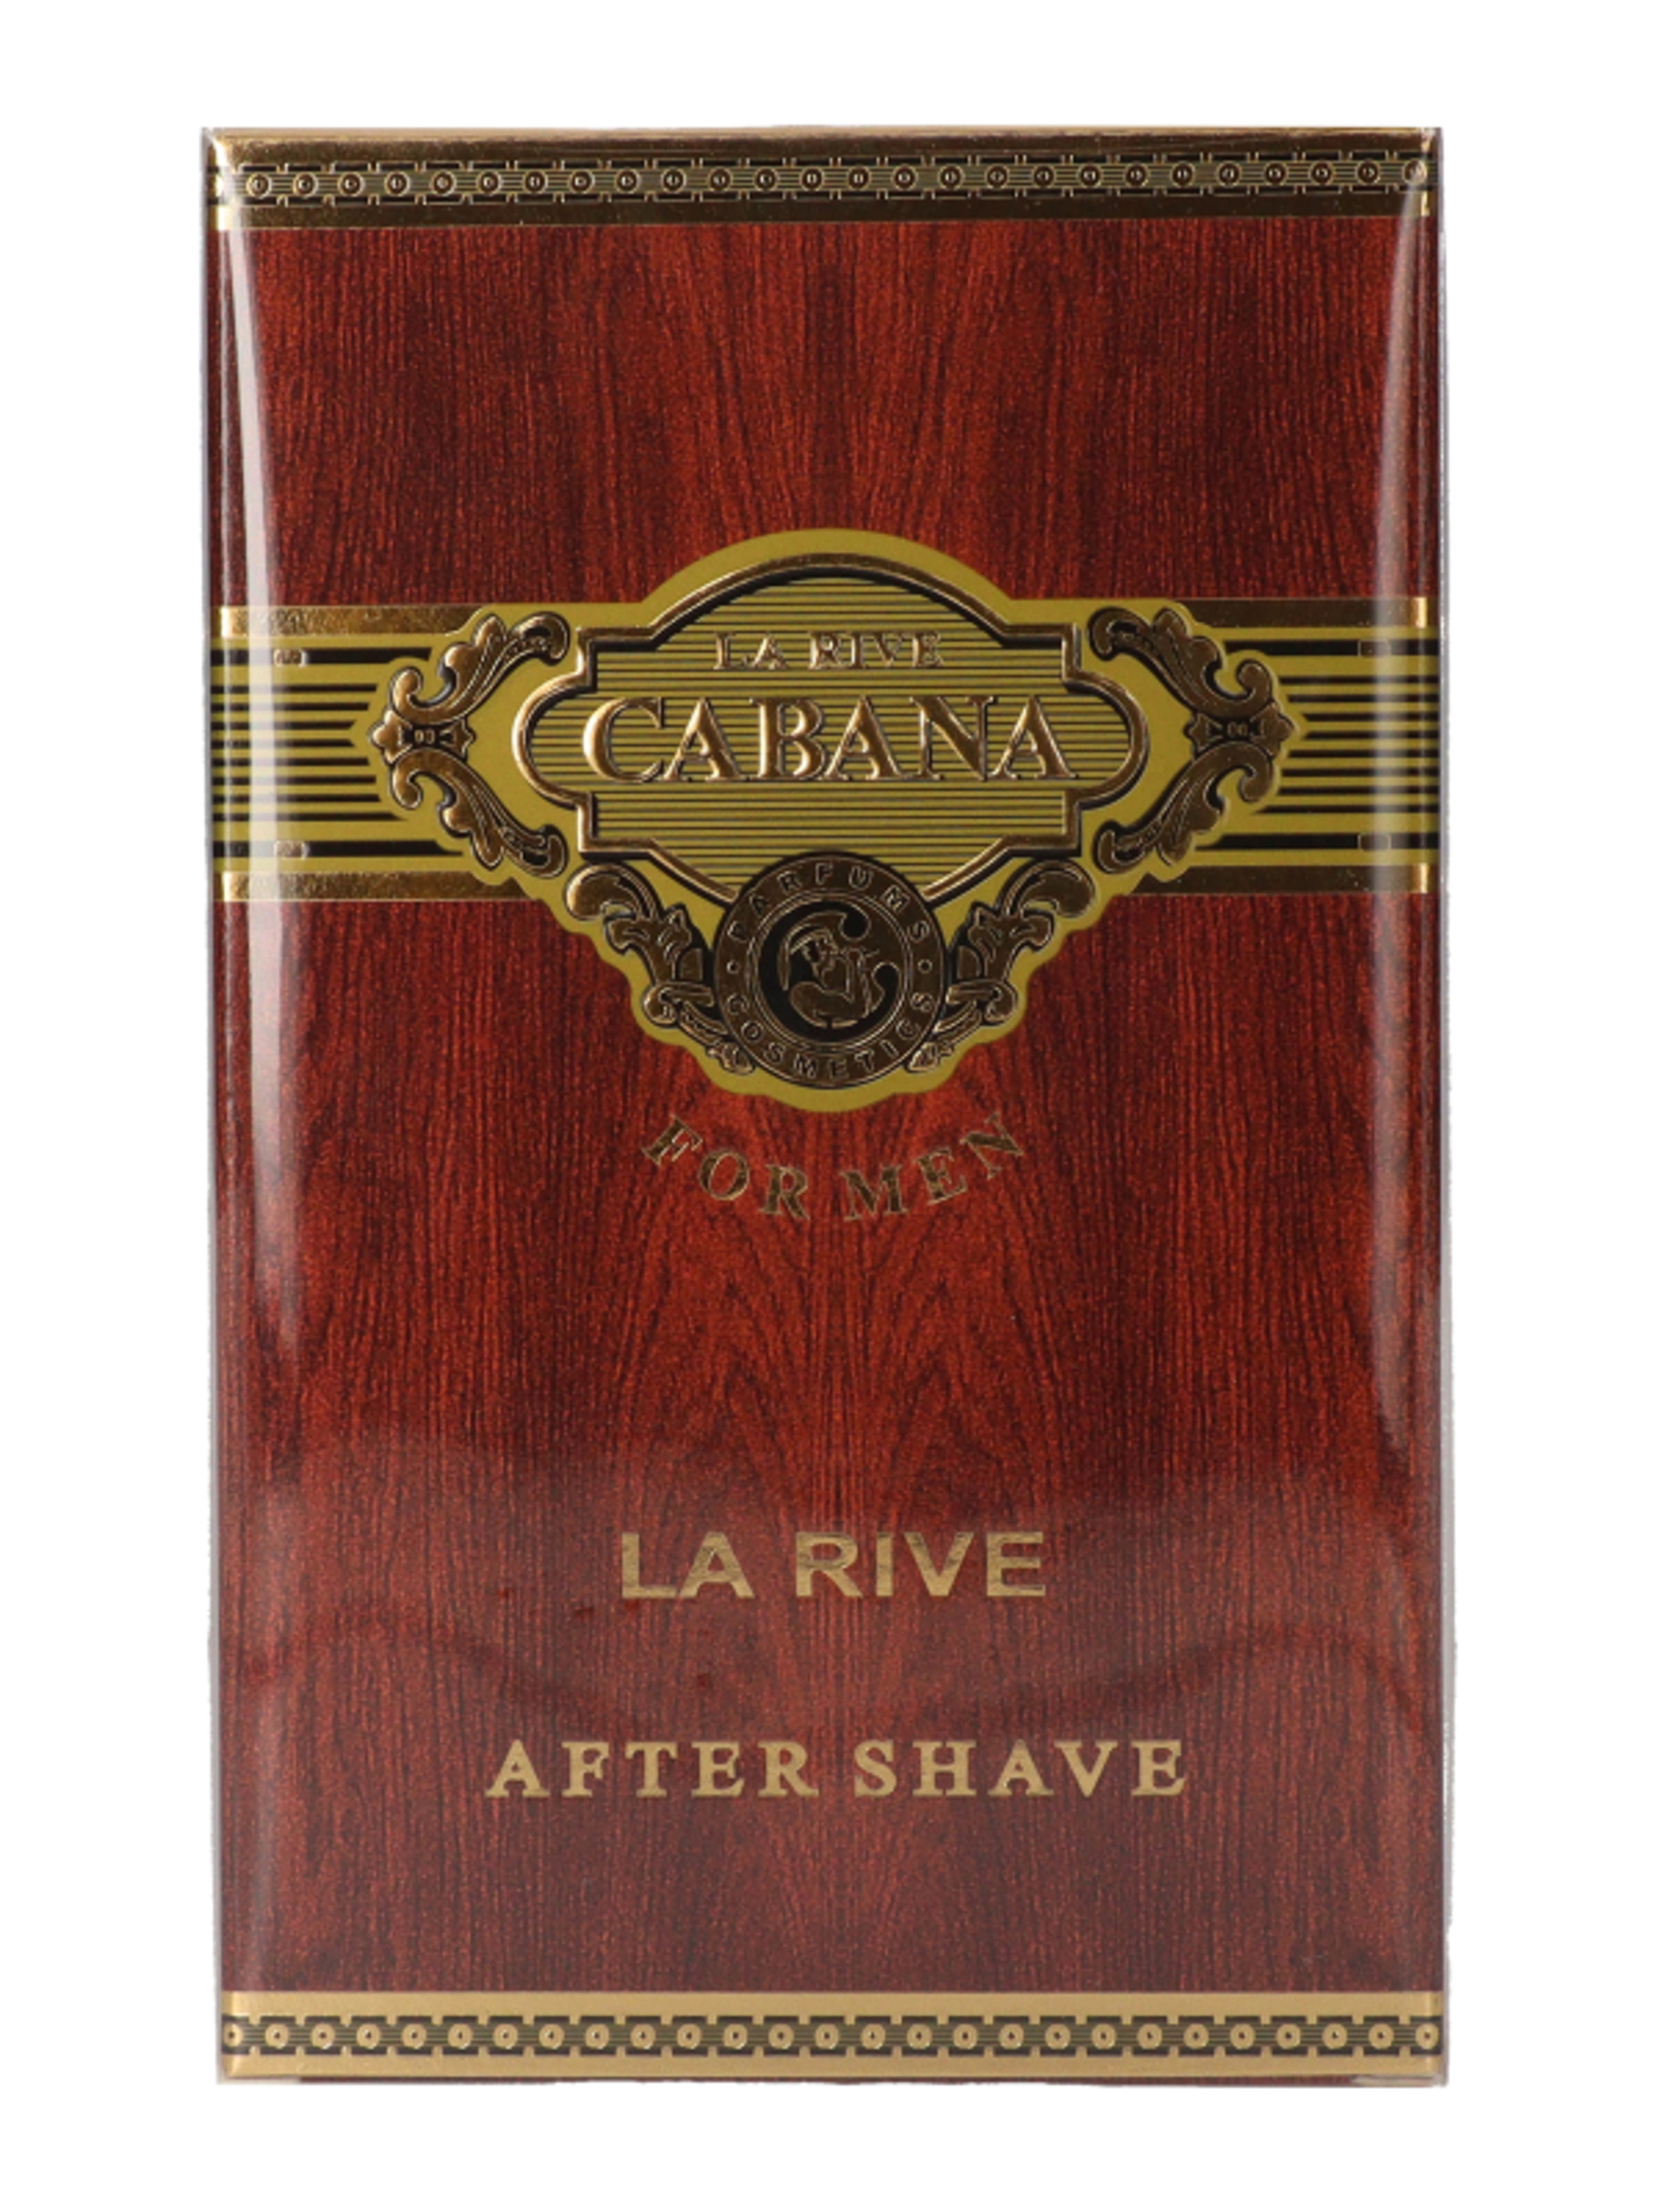 La Rive Cabana after shave - 100 ml-2